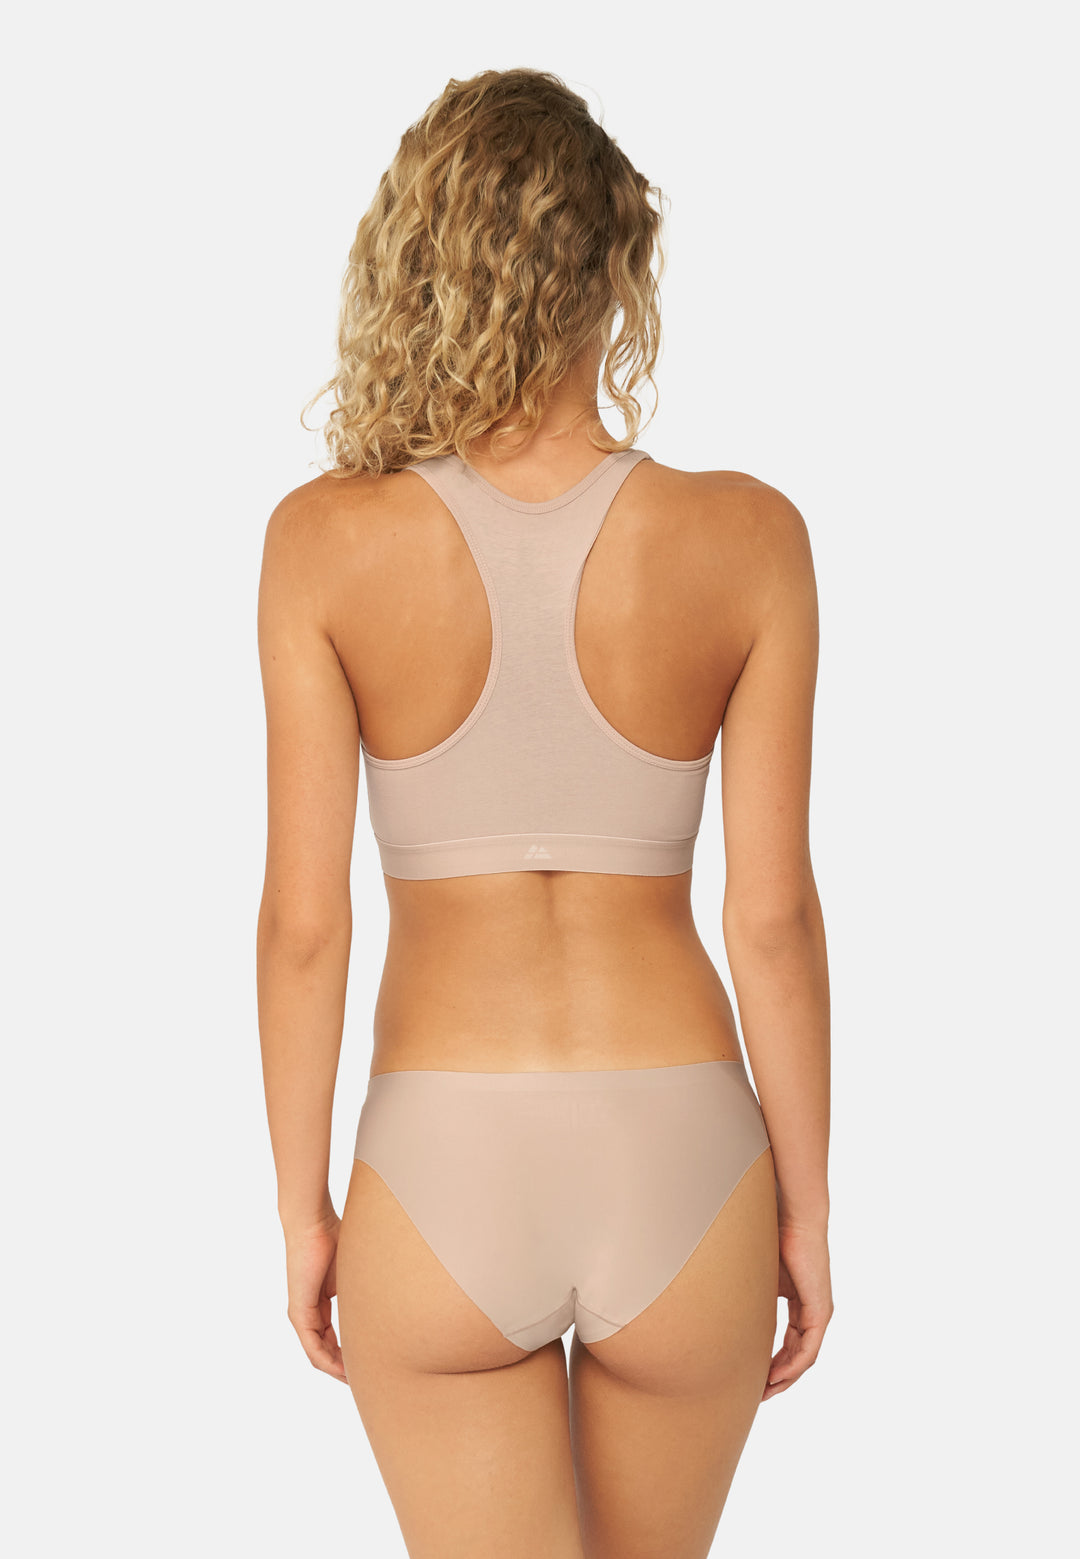 DANISH ENDURANCE Women's Organic Cotton Stretch Bikini Panties 6